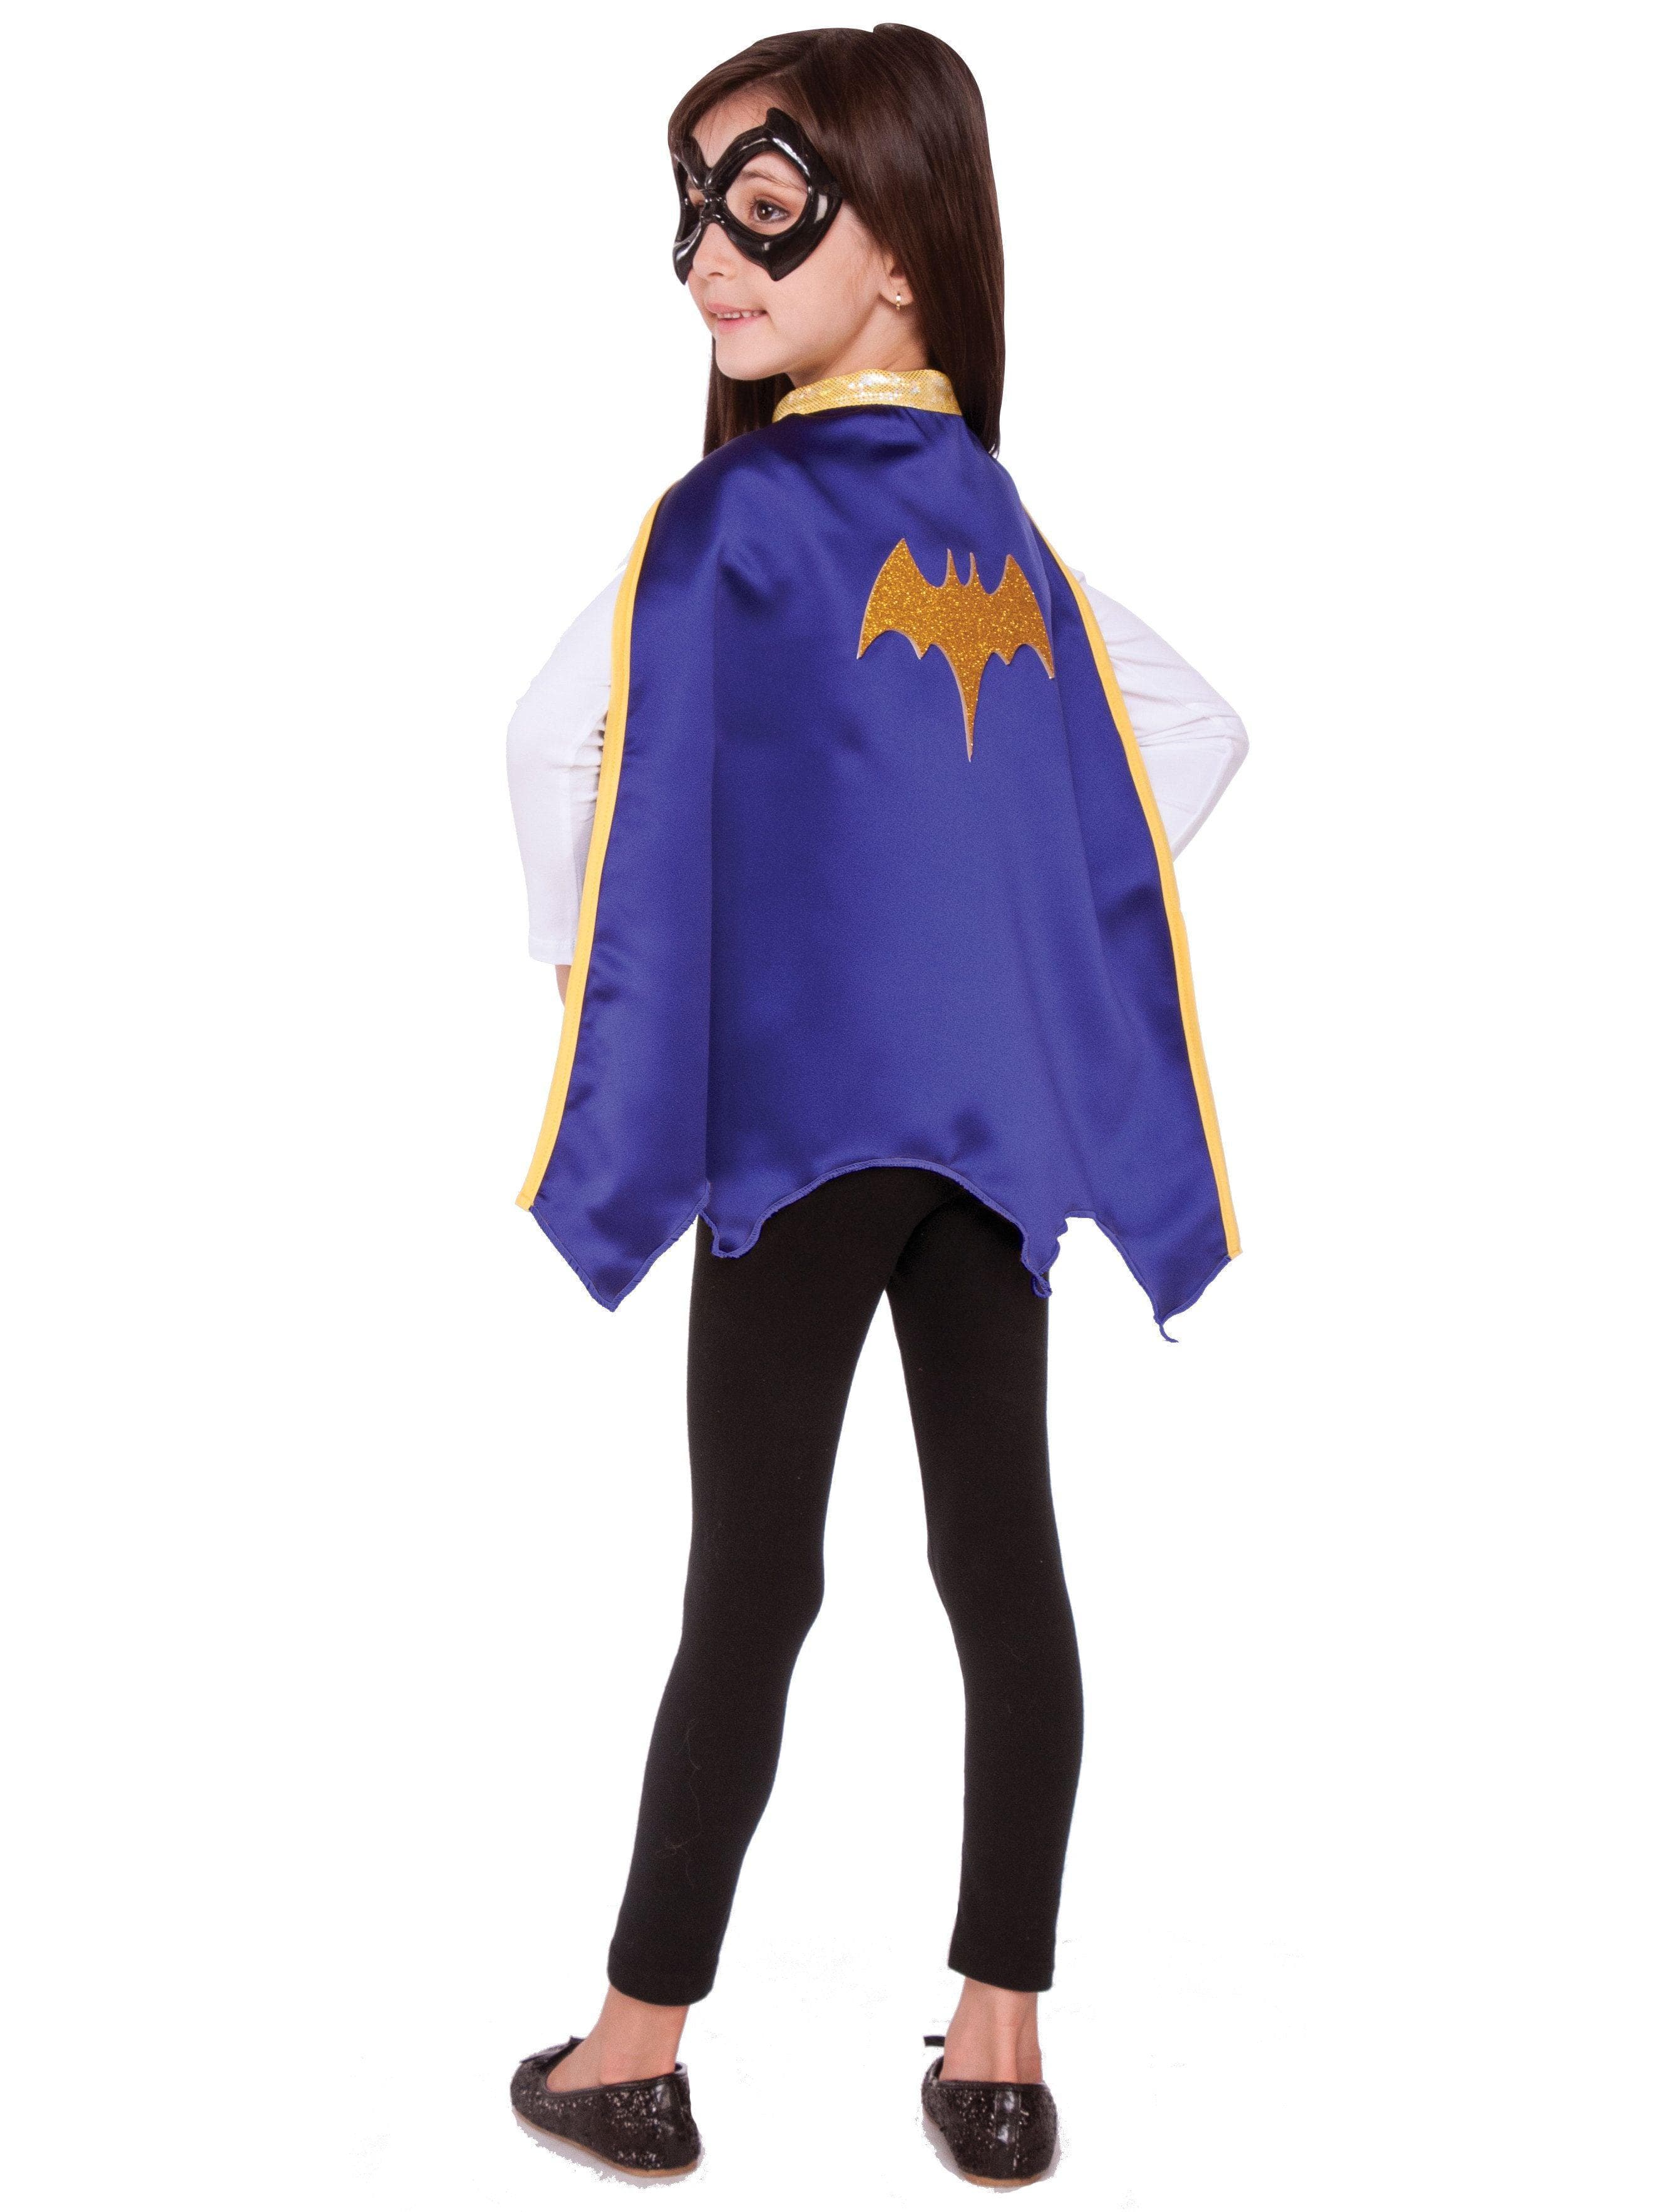 Girls' DC Superhero Girls Batgirl Cape - costumes.com